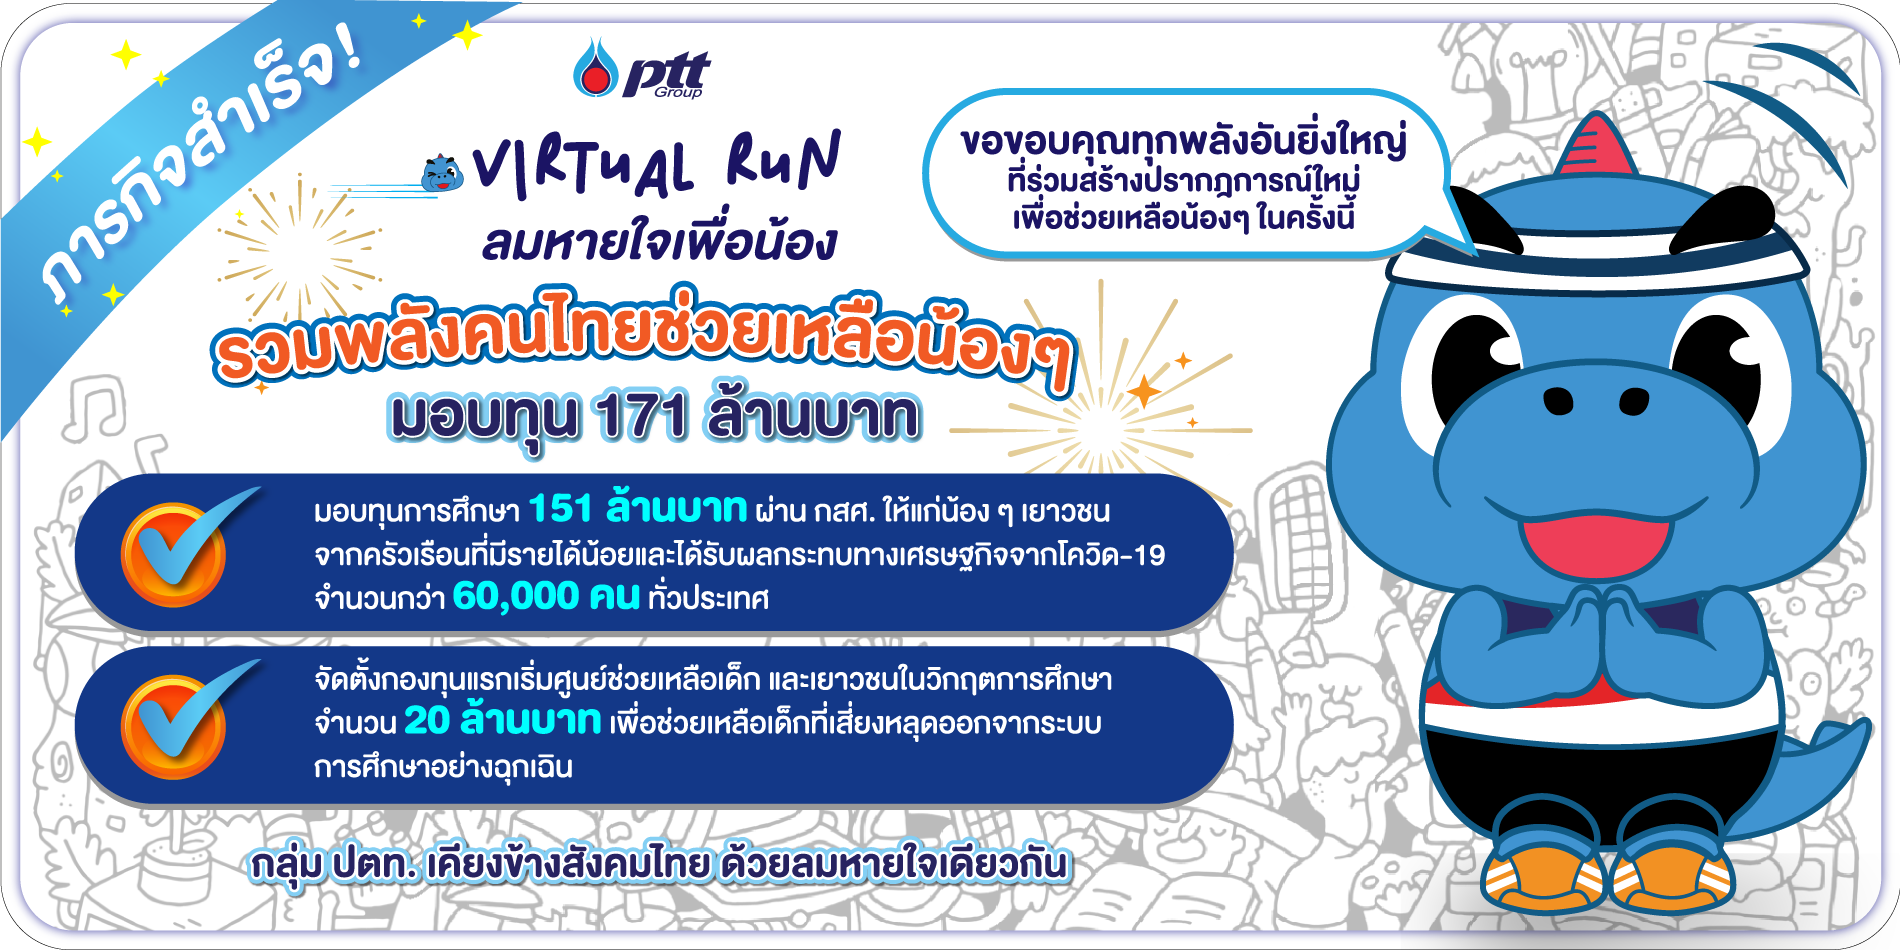 2022-06-30_PTT-Virtual-Run_Banner_1900x950px